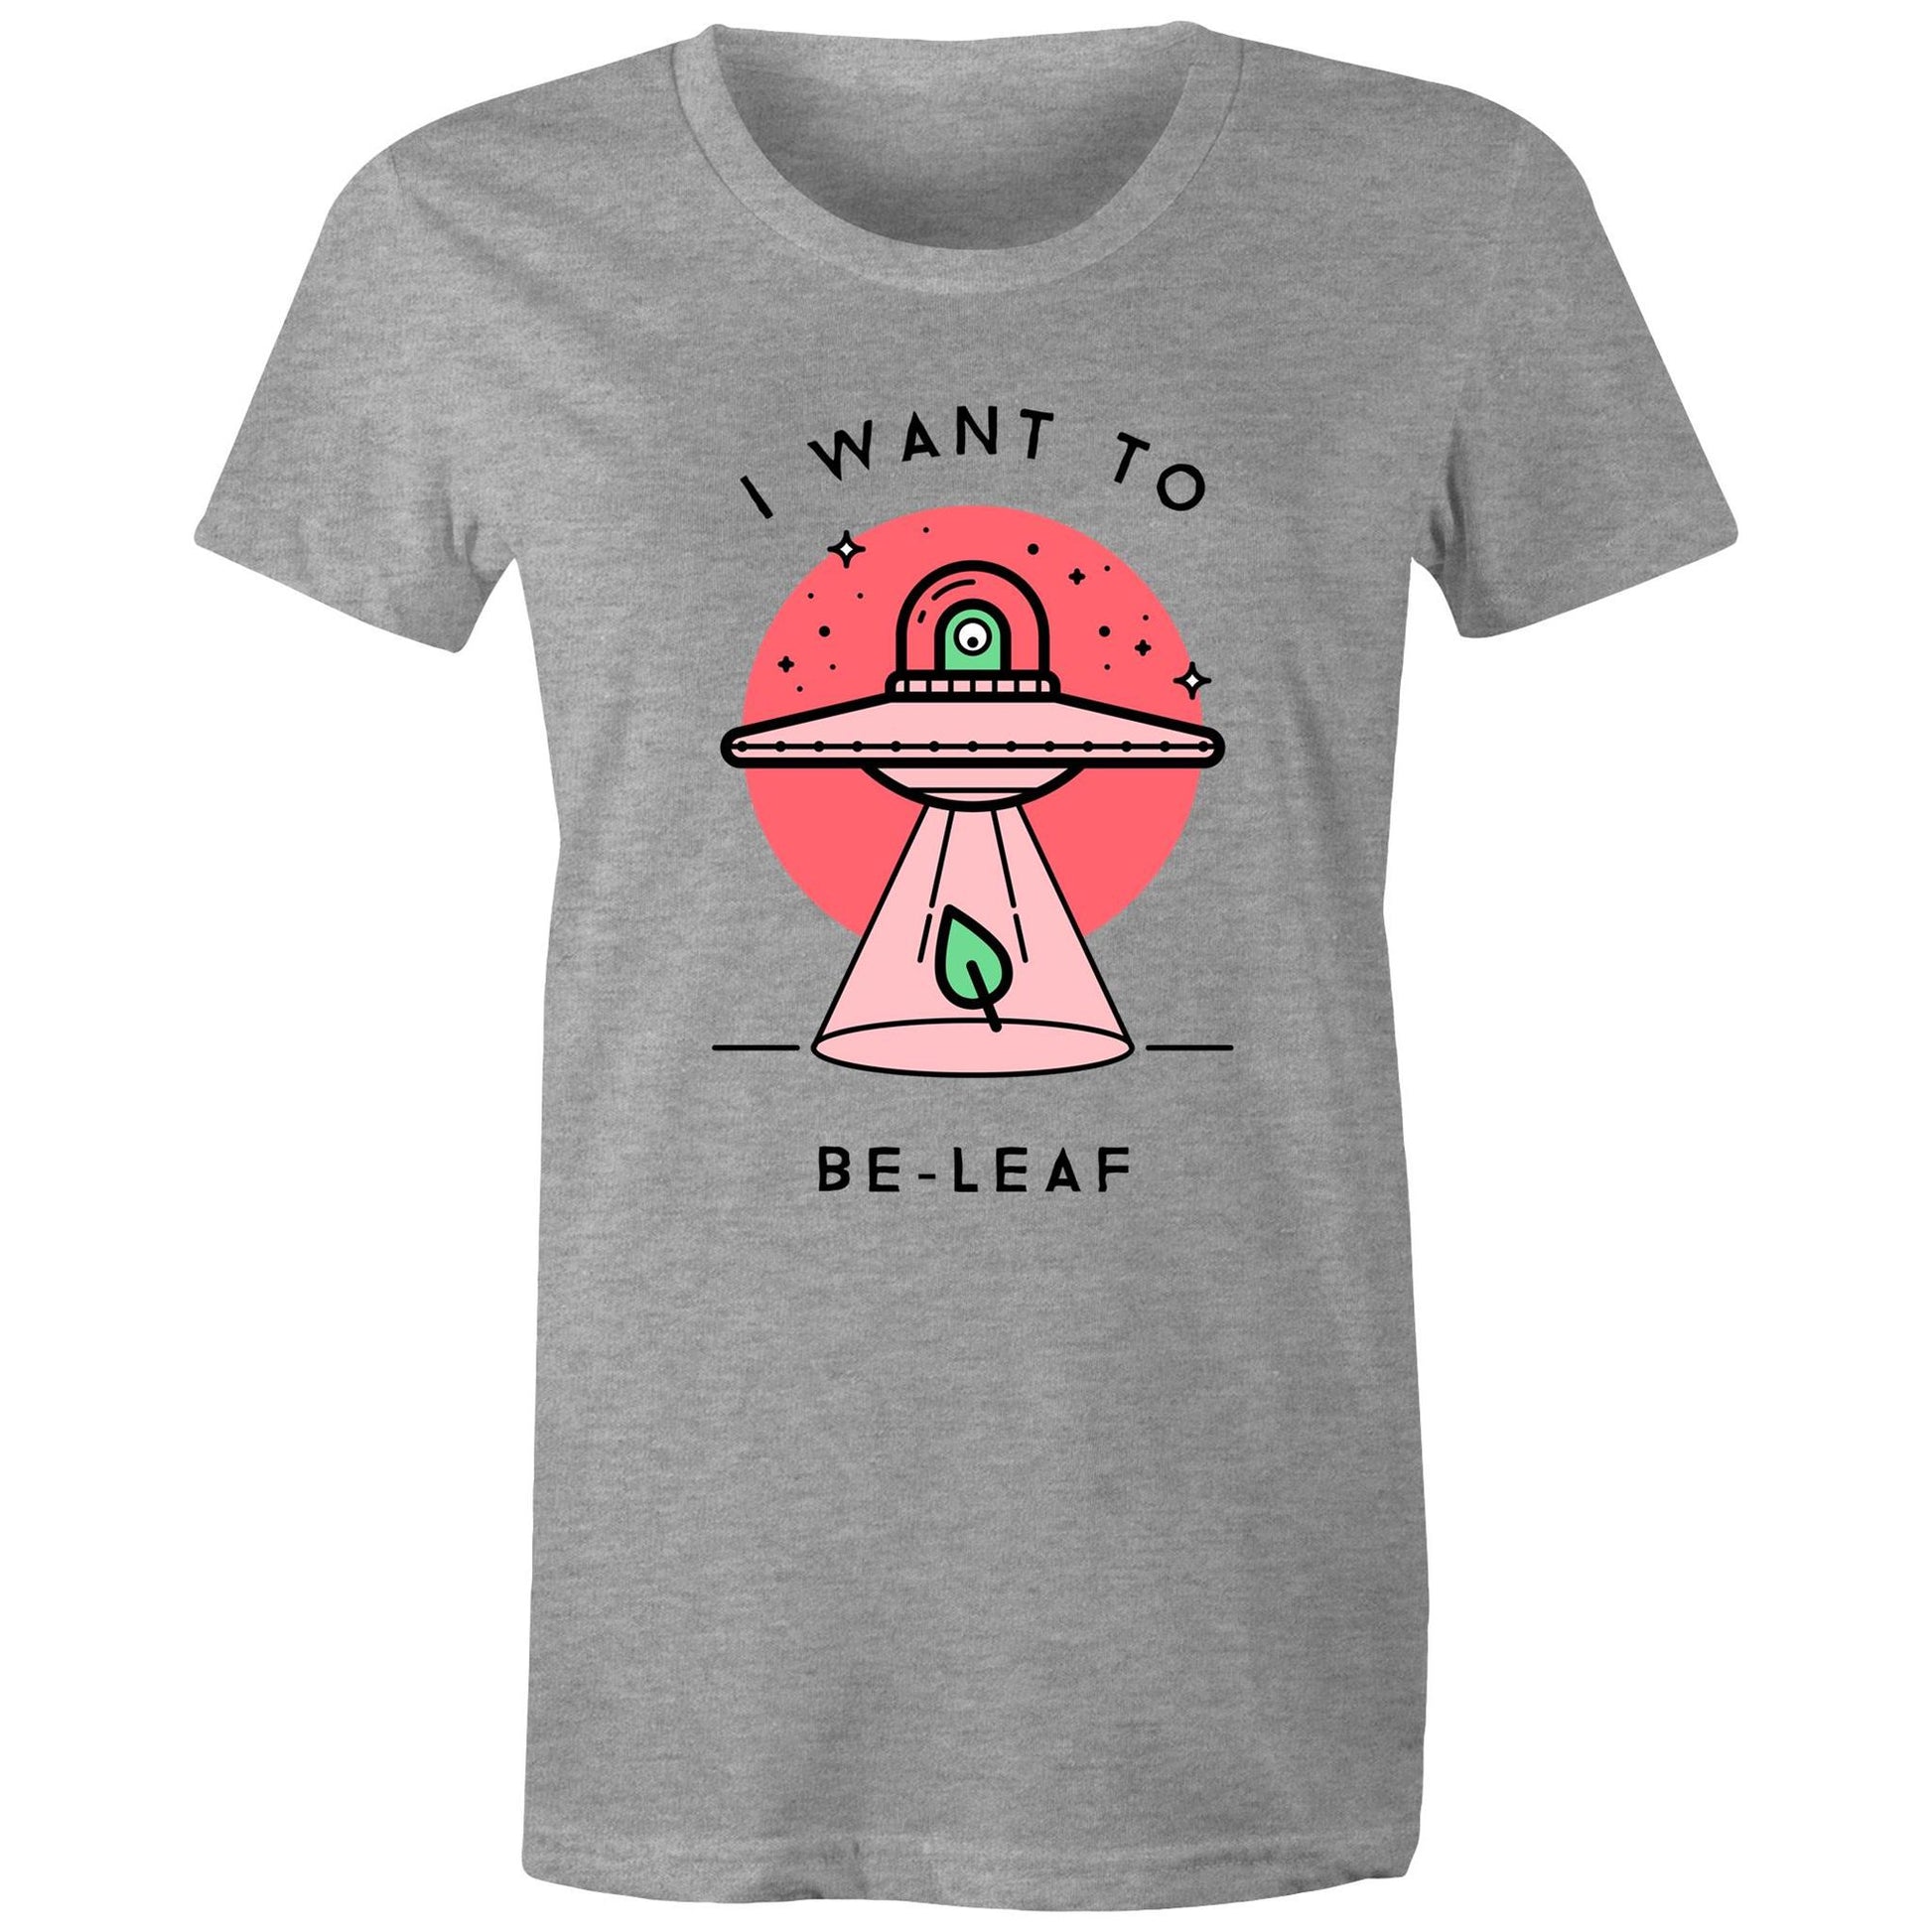 I Want To Be-Leaf, UFO - Womens T-shirt Grey Marle Womens T-shirt Sci Fi